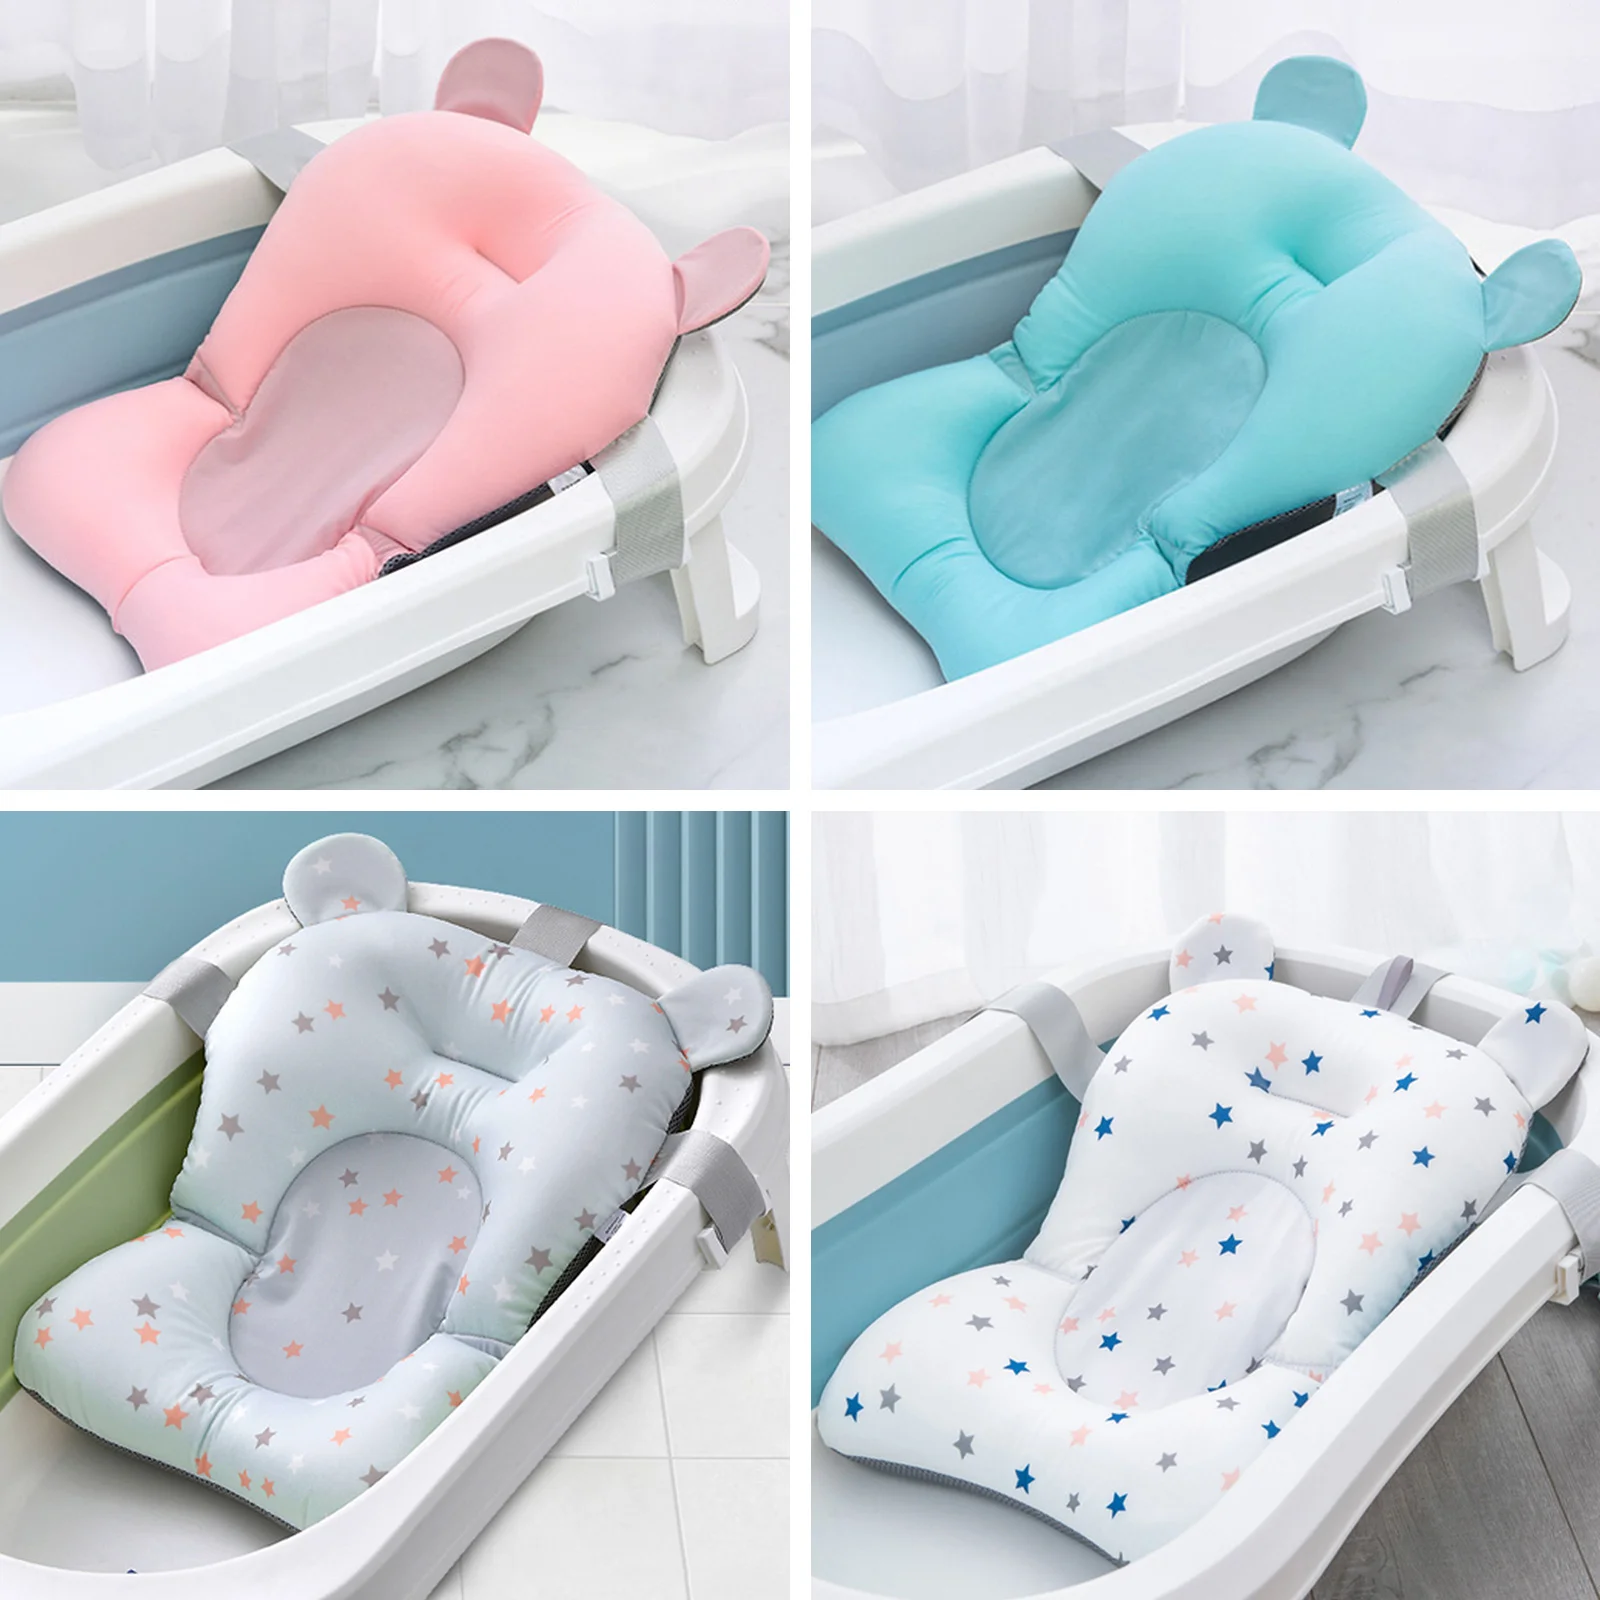 Universal Baby Bath Pad Floating Non-slip Infant Bath Tub Cushion Pillow Support Seat for Newborn Boys Girls 0-12 Months